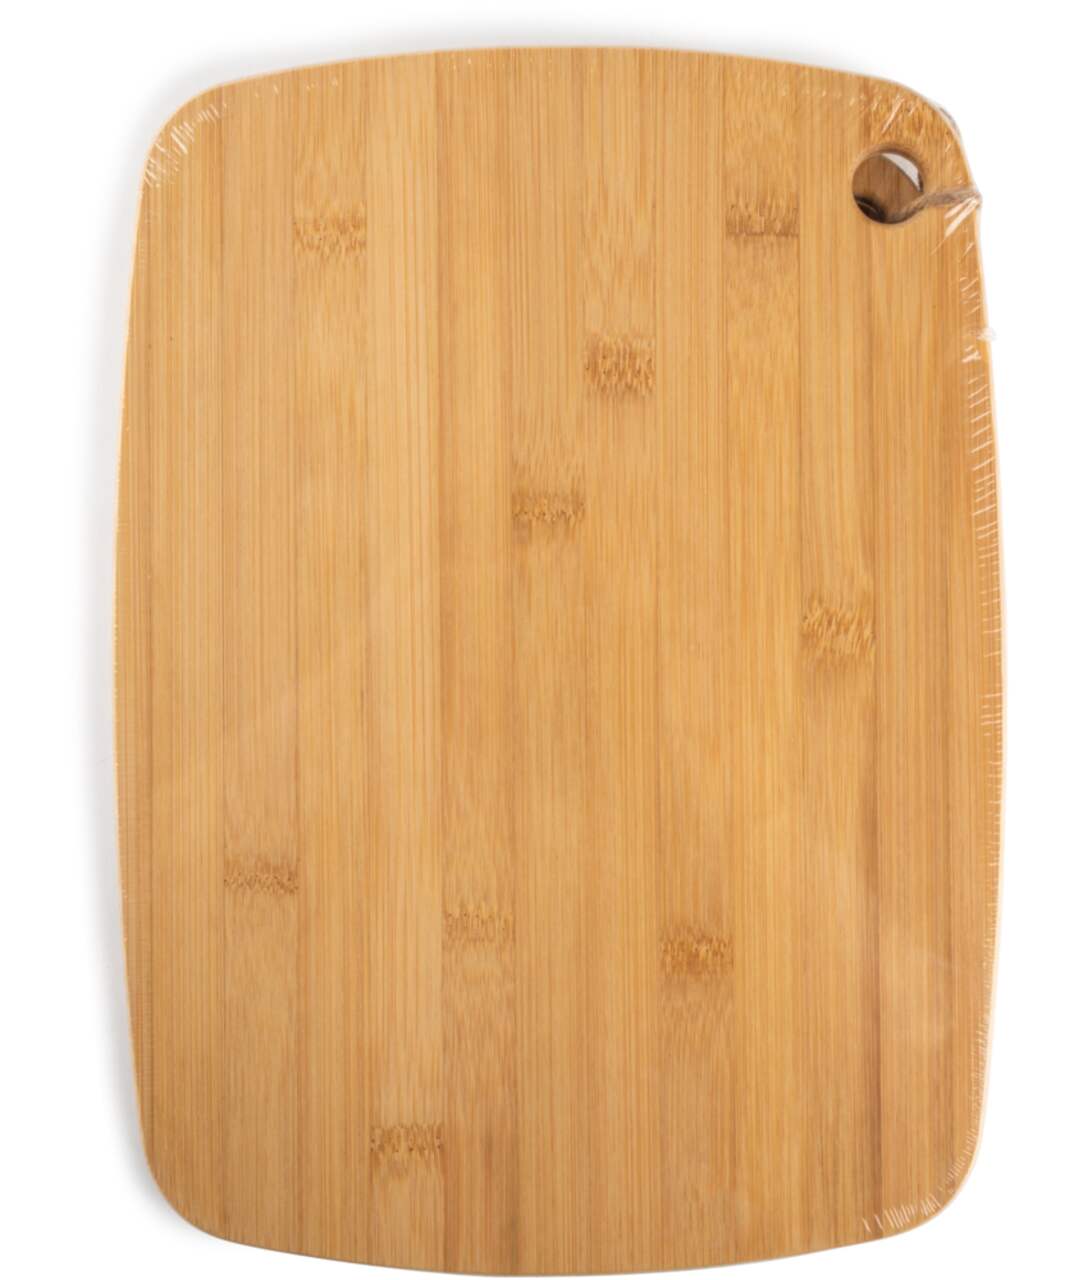 Master Chef Bamboo Cutting Board, Dishwasher Safe, Assorted Sizes, 3-pk